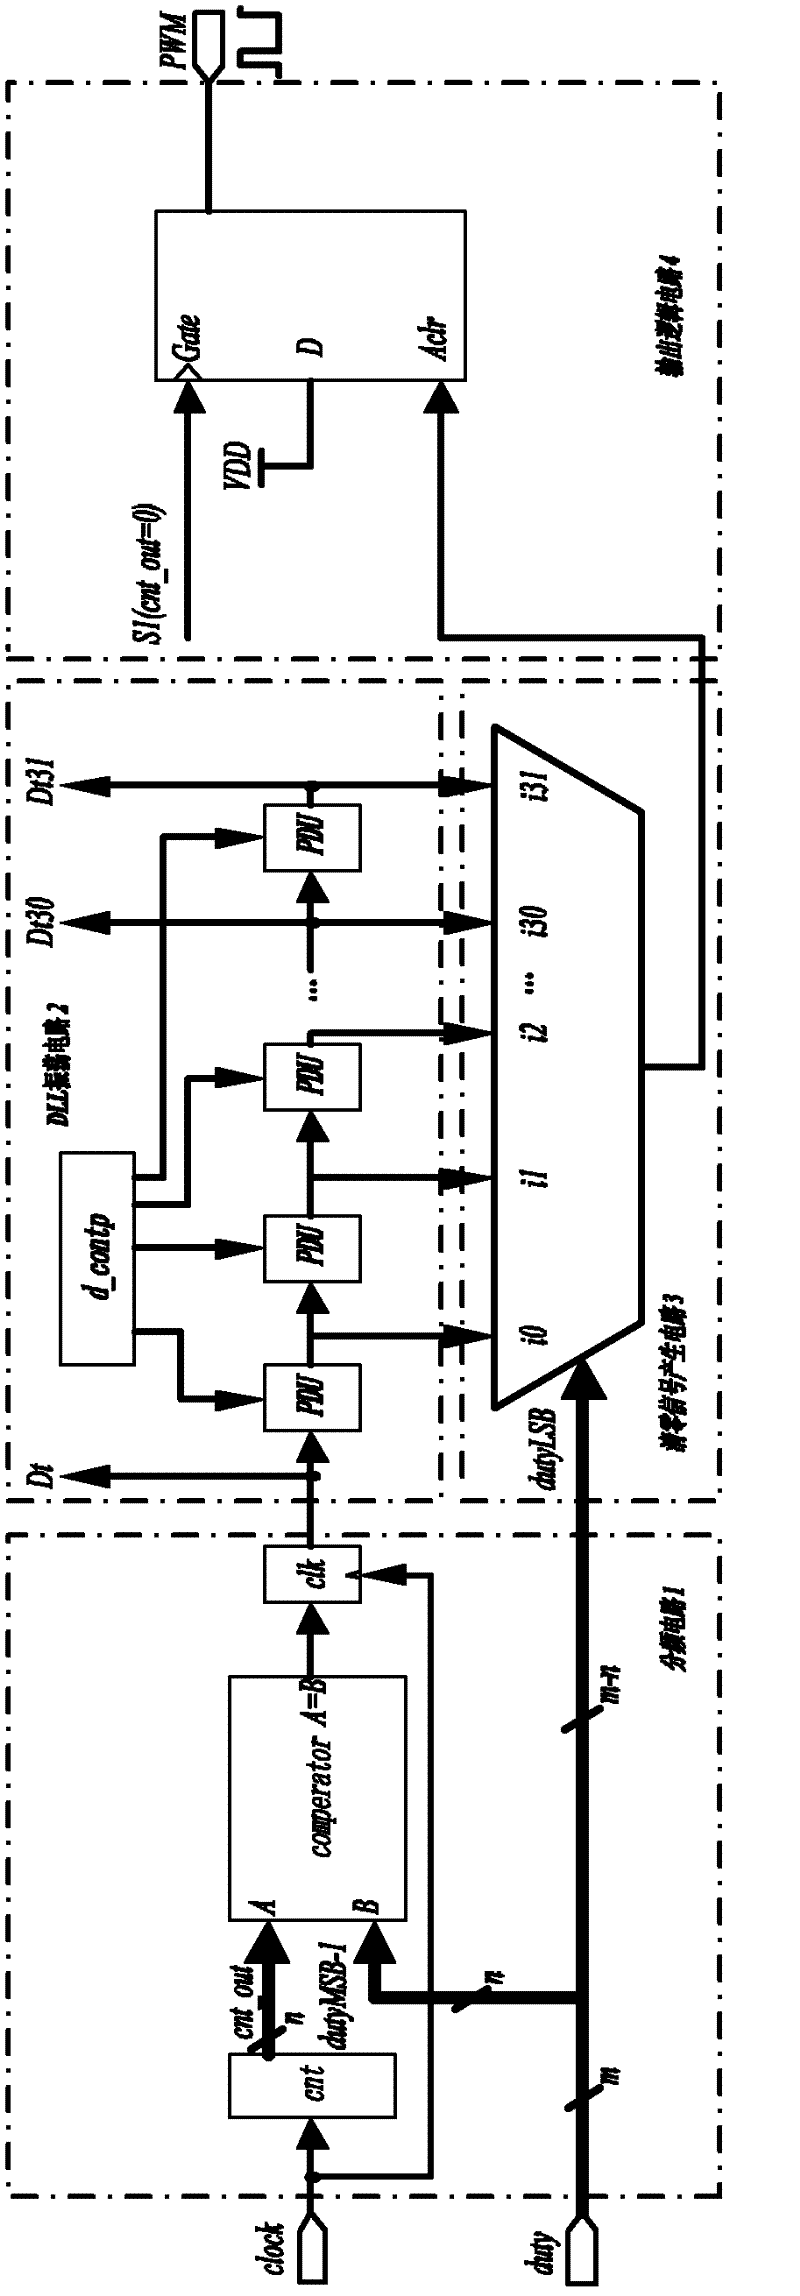 Digital pulse width modulator based on digital delayed-locked loop (DLL)